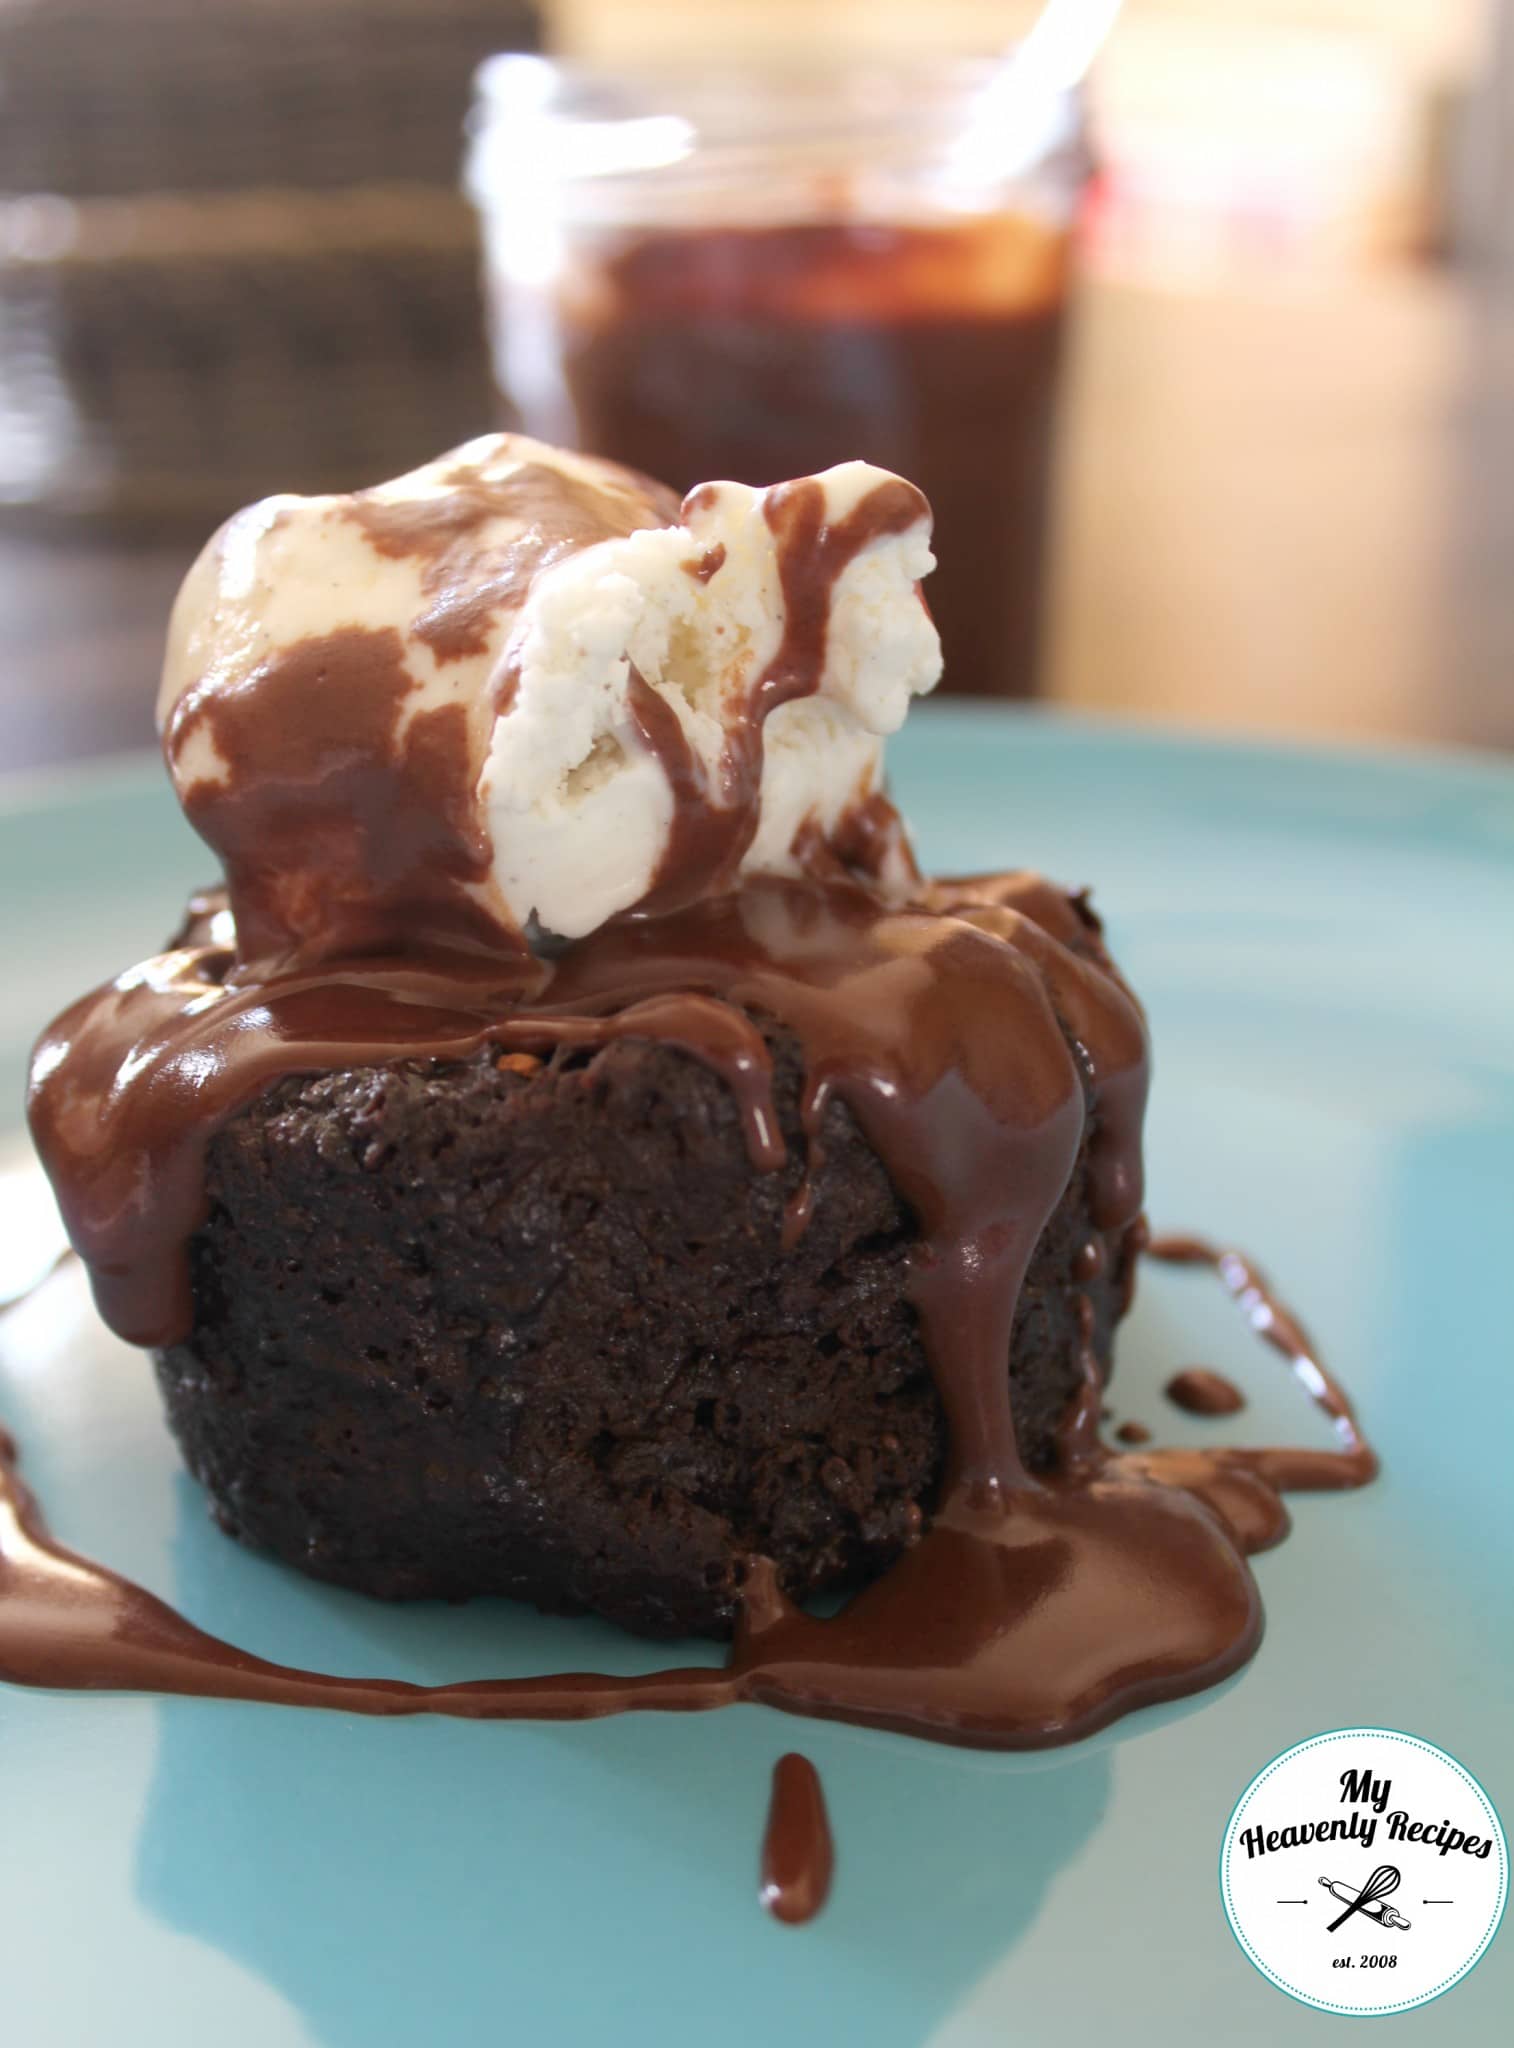 moist chocolate microwave cake topped with ice cream and chocolate sauce